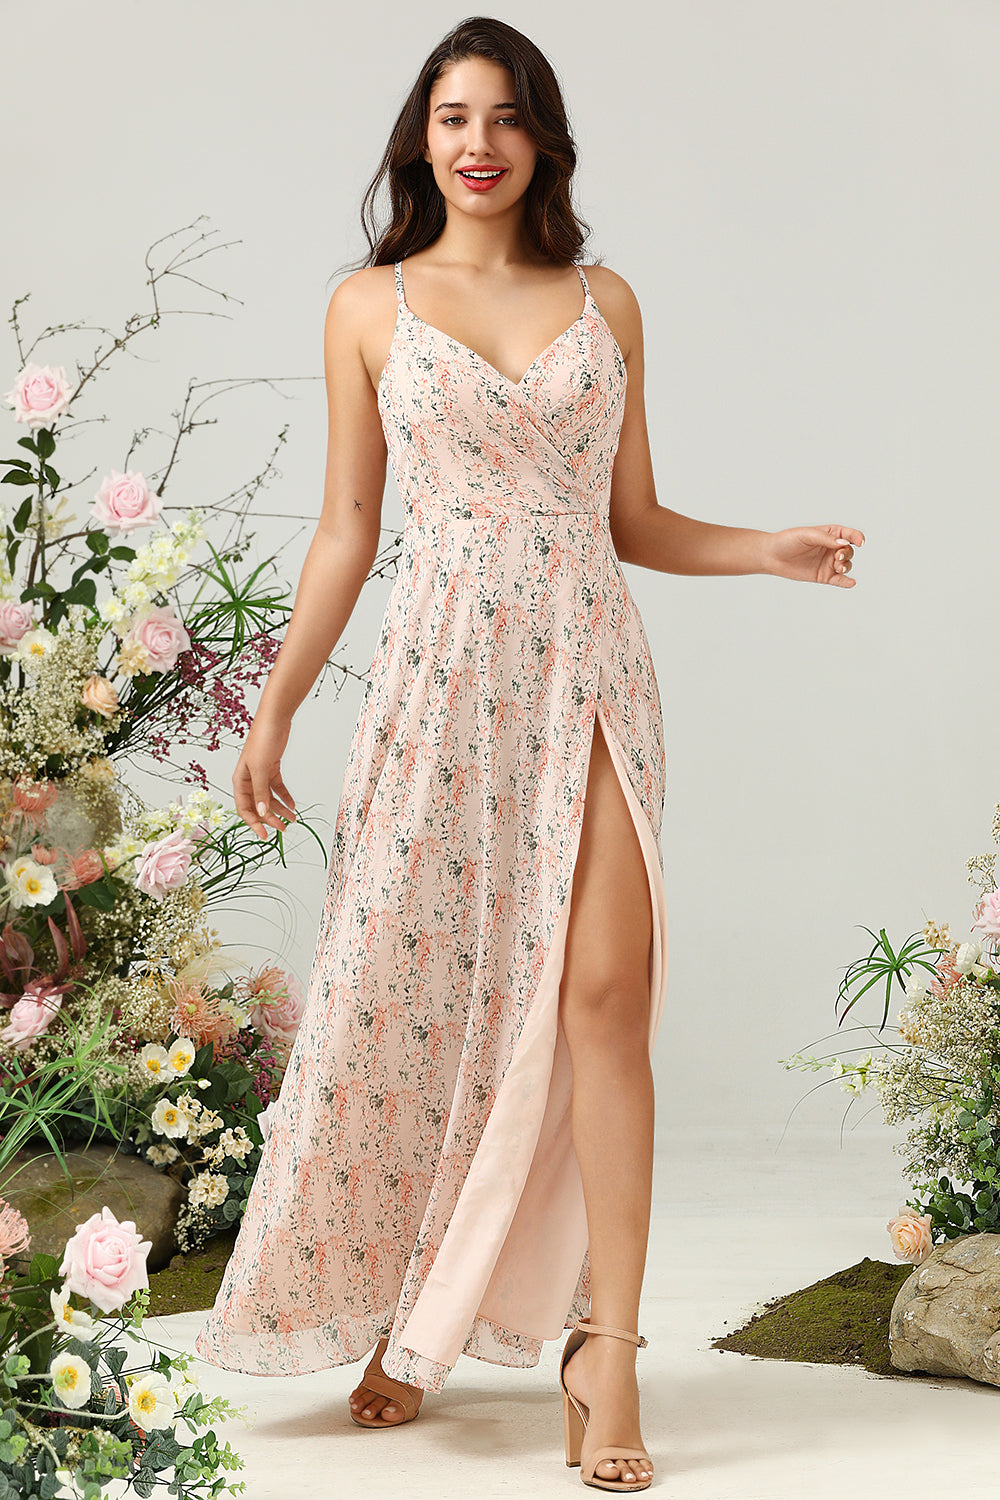 Blush Floral Chiffon Long Bridesmaid Dress with Slit